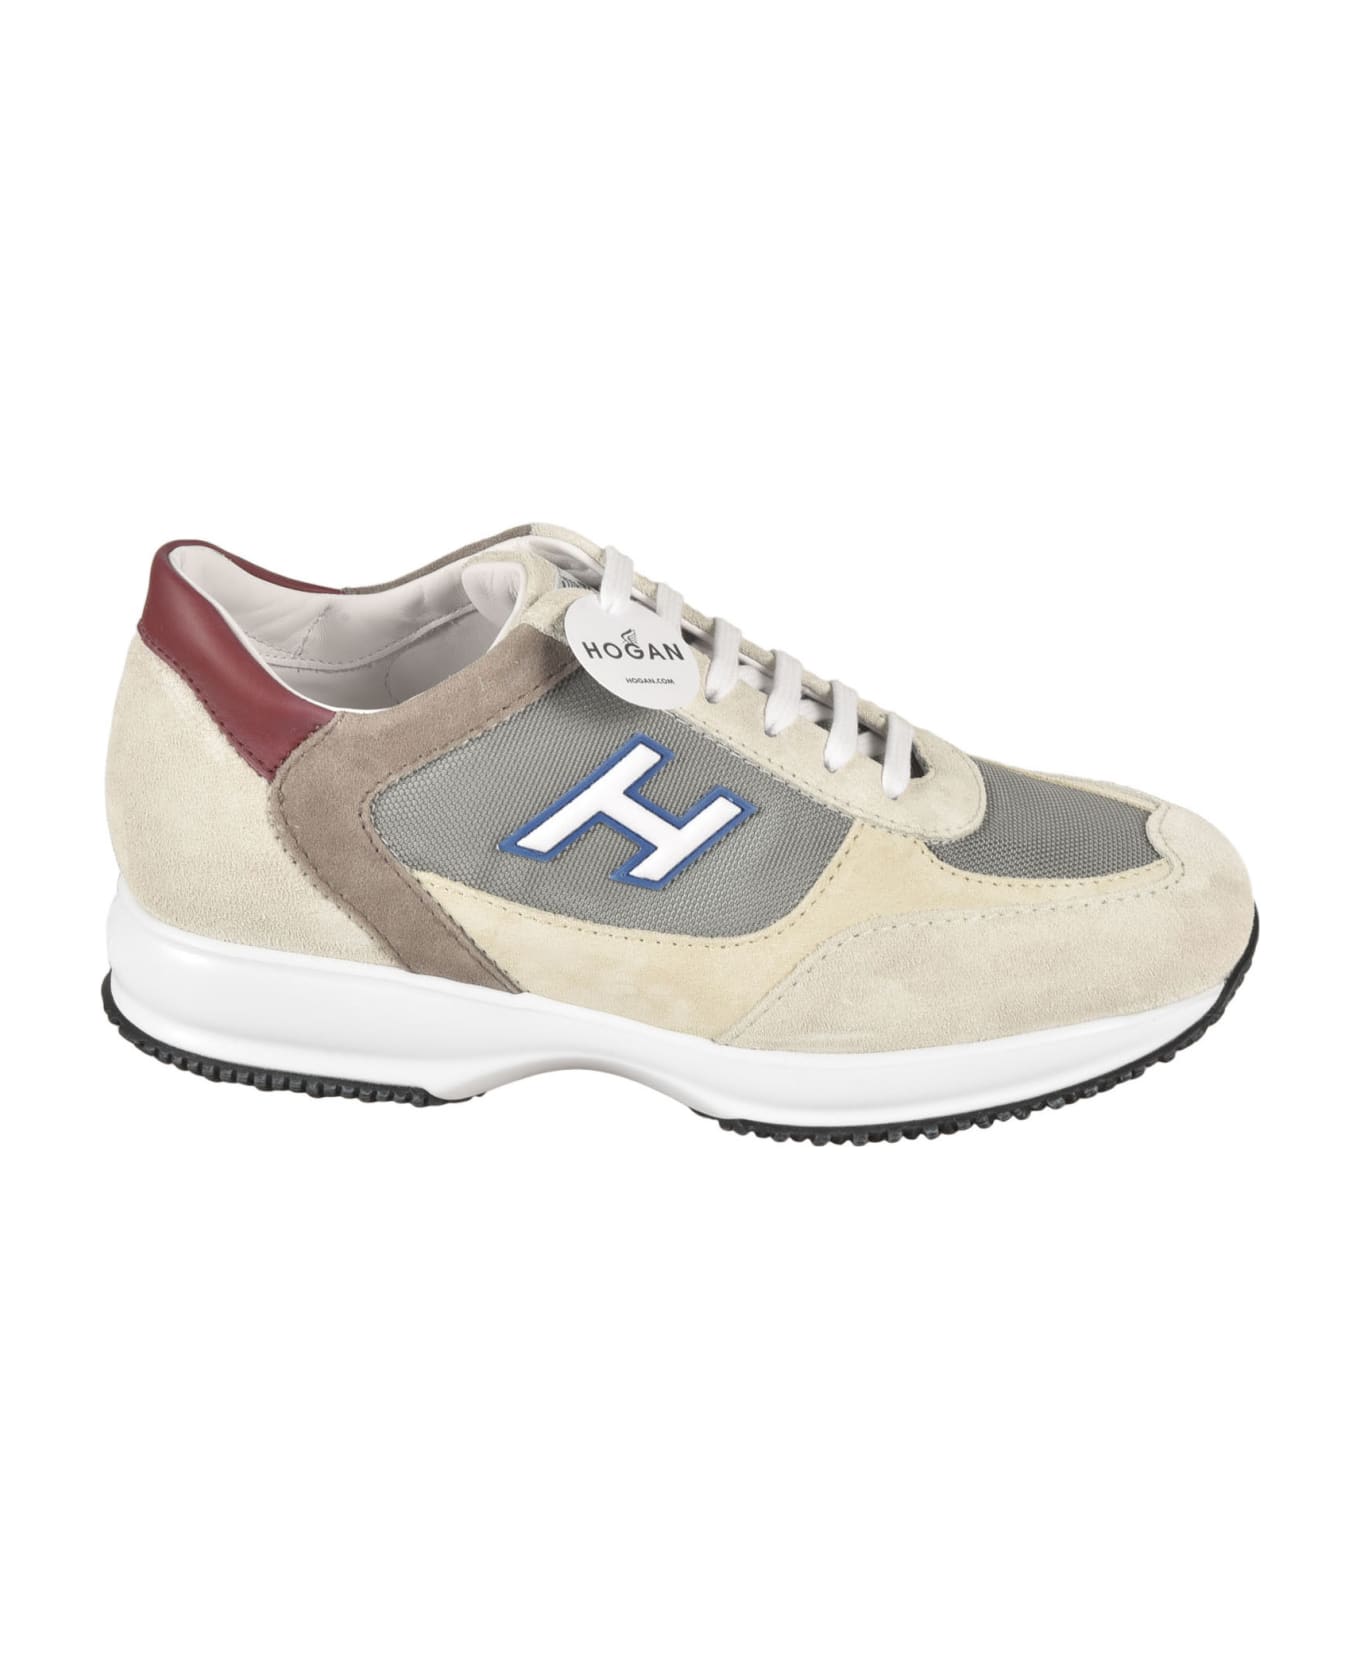 Hogan Interactive H Flock Sneakers - Latte